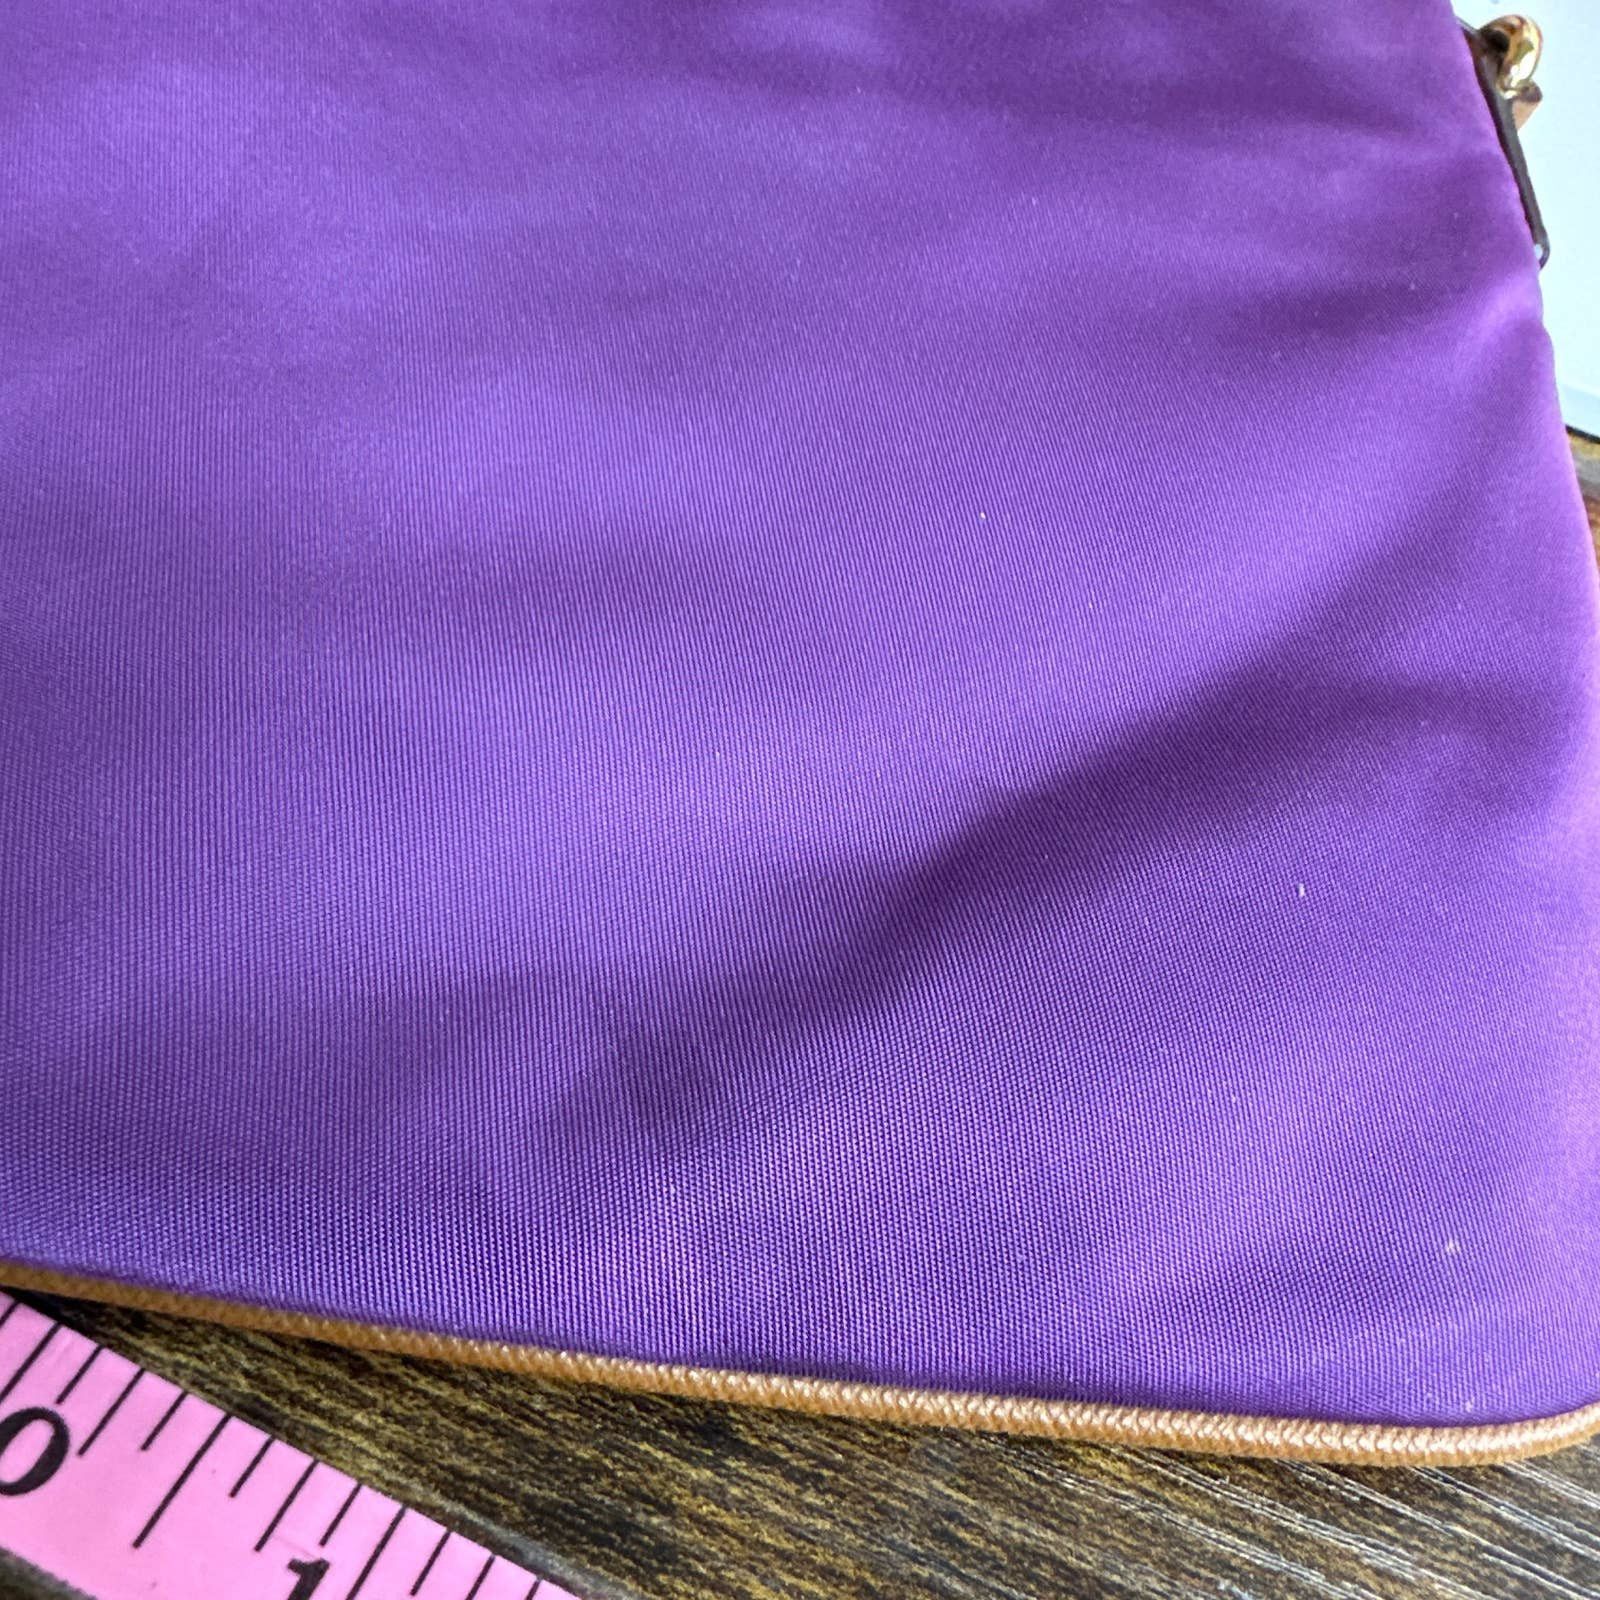 Michael Kors MICHAEL KORS Purple Nylon Crossbody Size ONE SIZE - 9 Preview